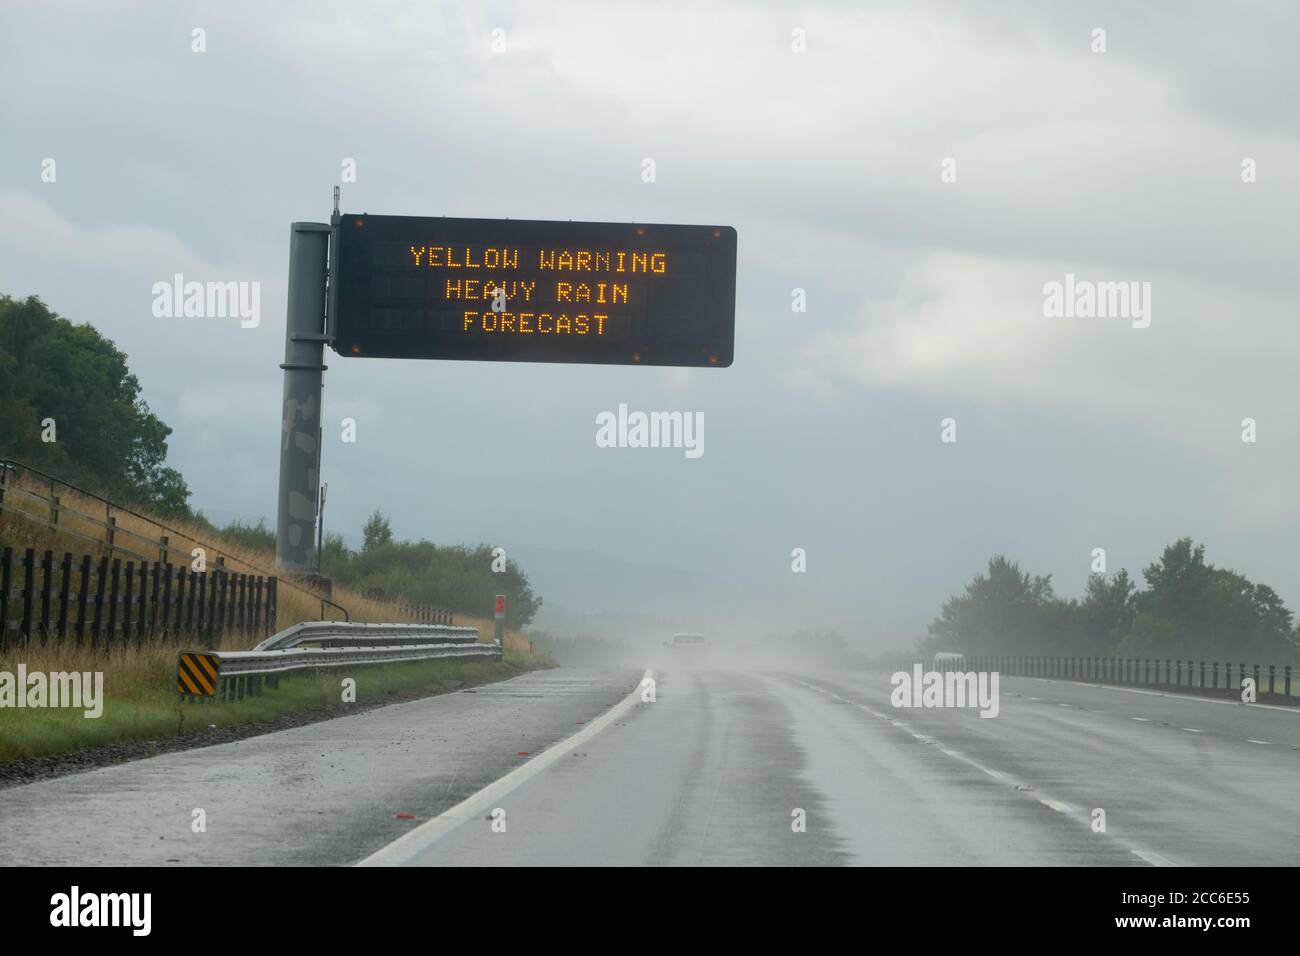 Yellow Warning Heavy Rain Forecast on UK motorway Stock Photo